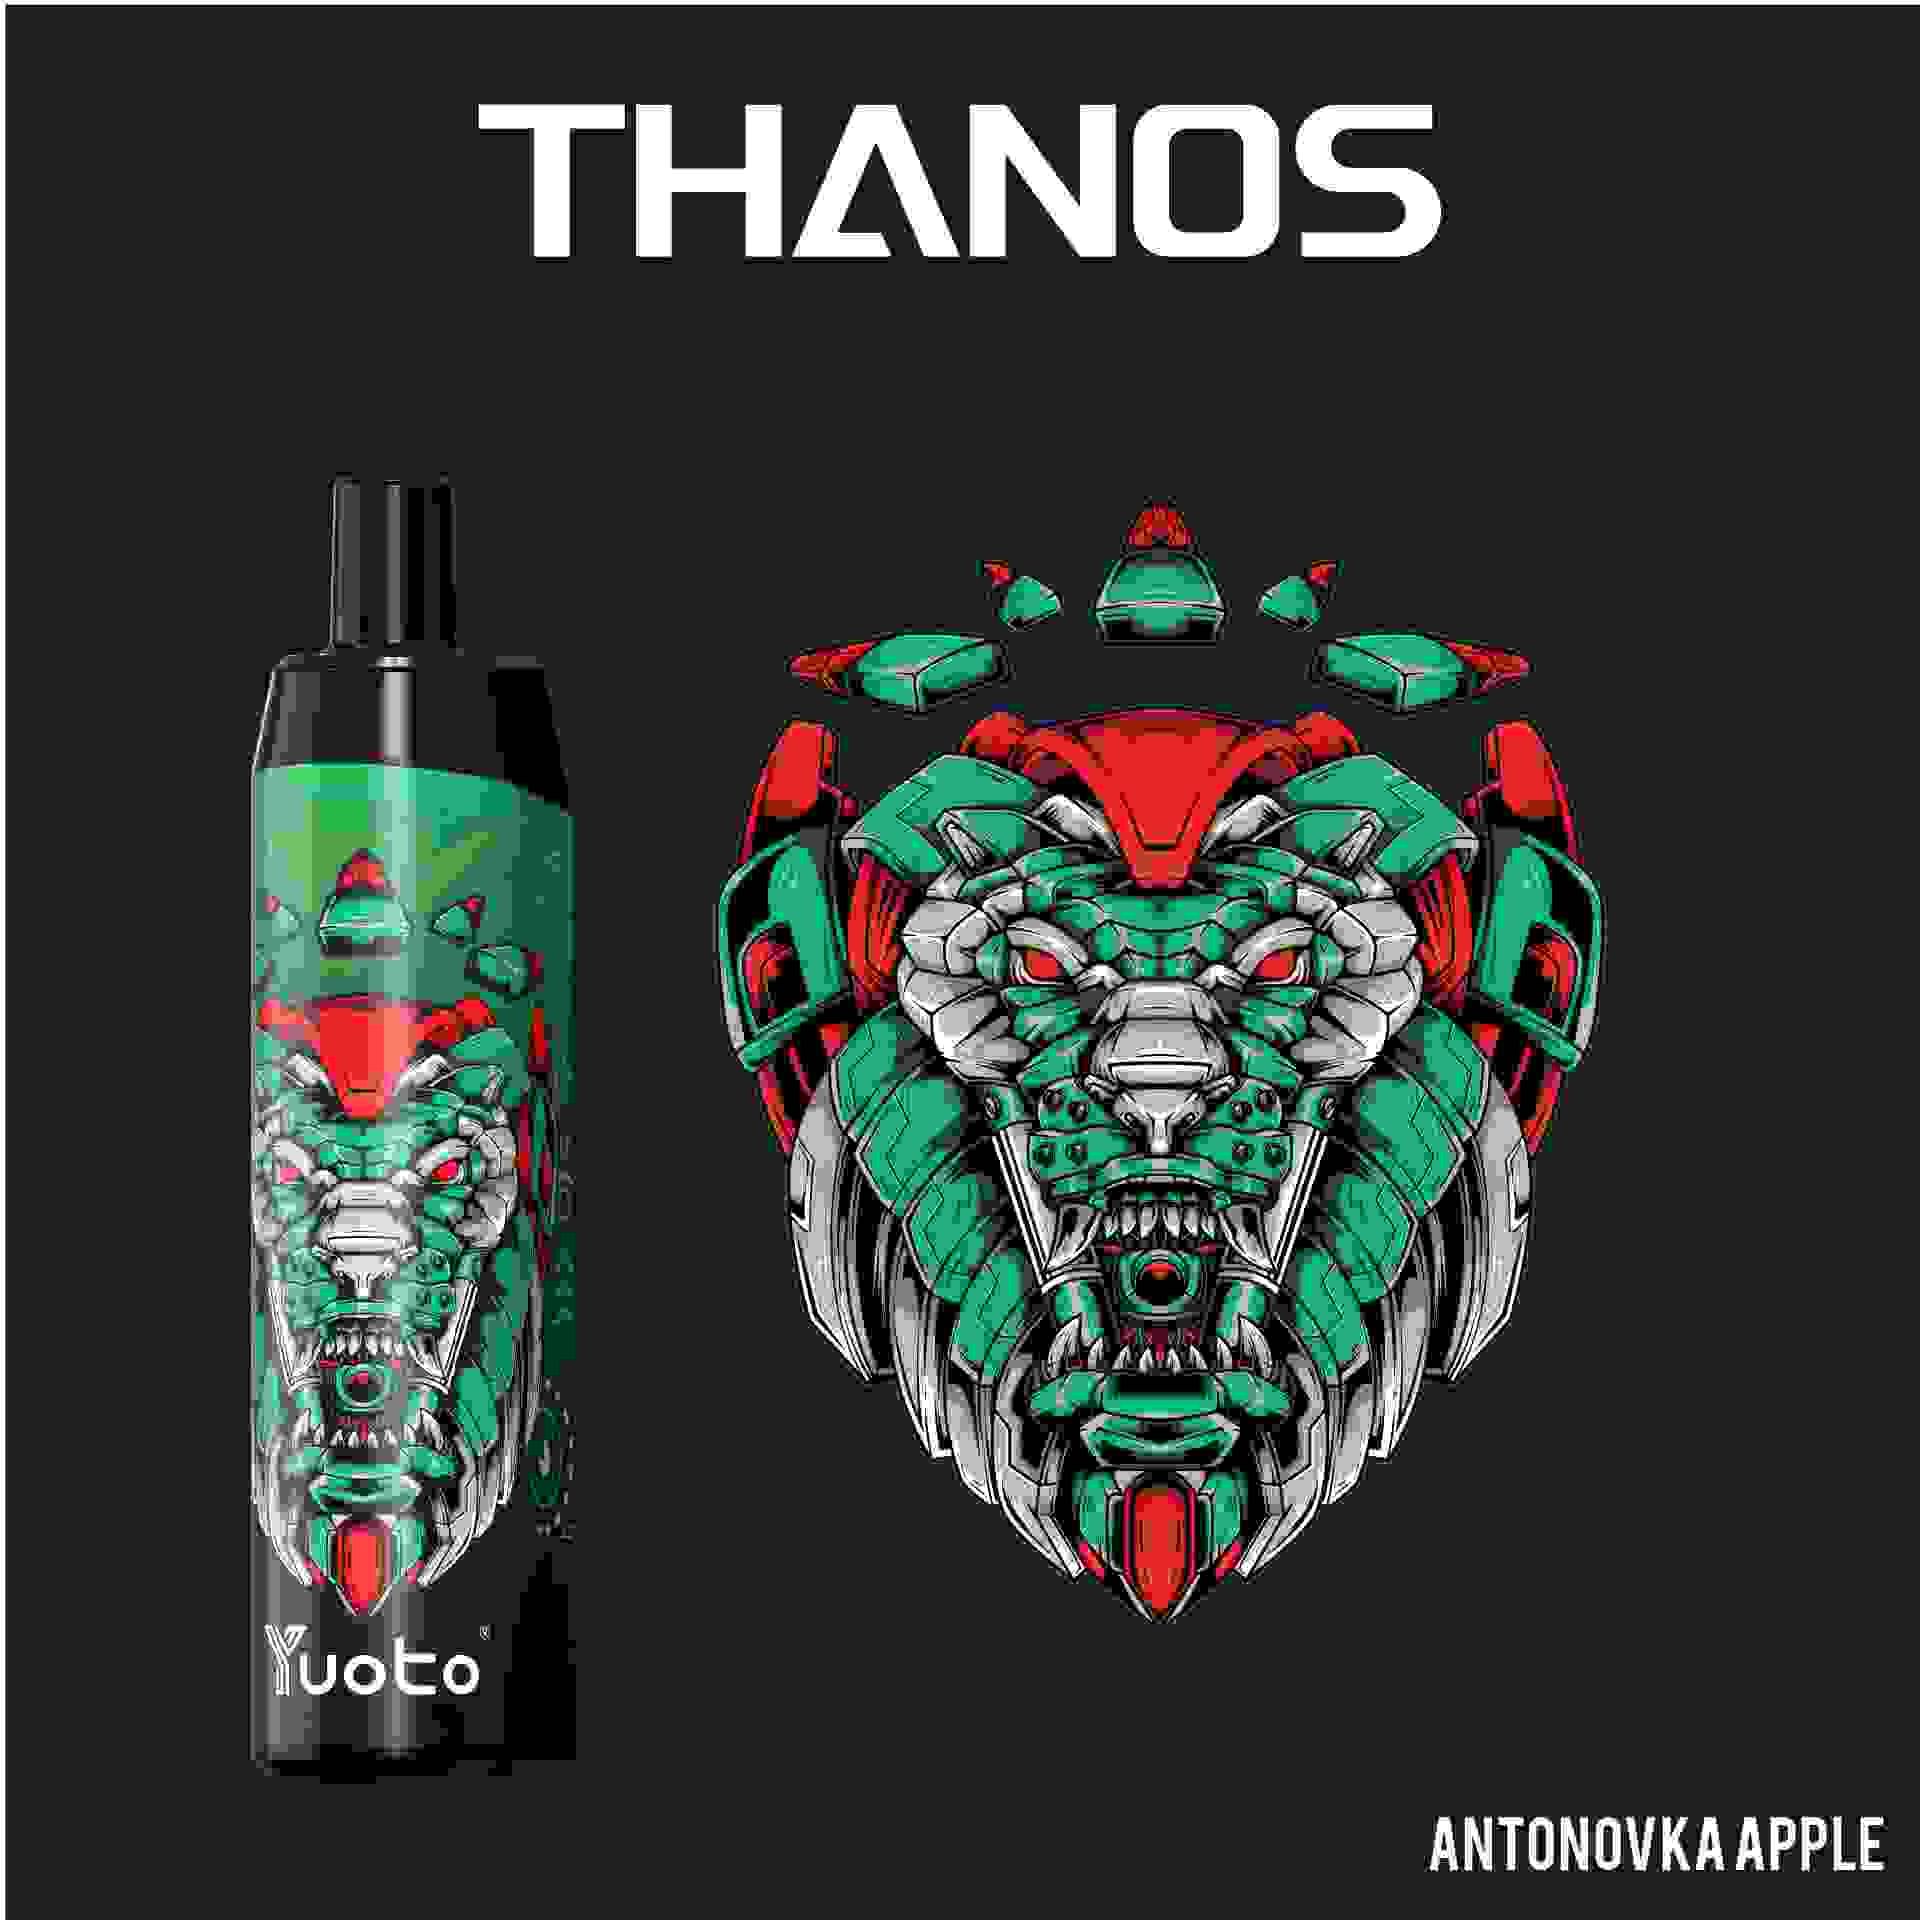 Antonovka Apple – Yuoto Thanos